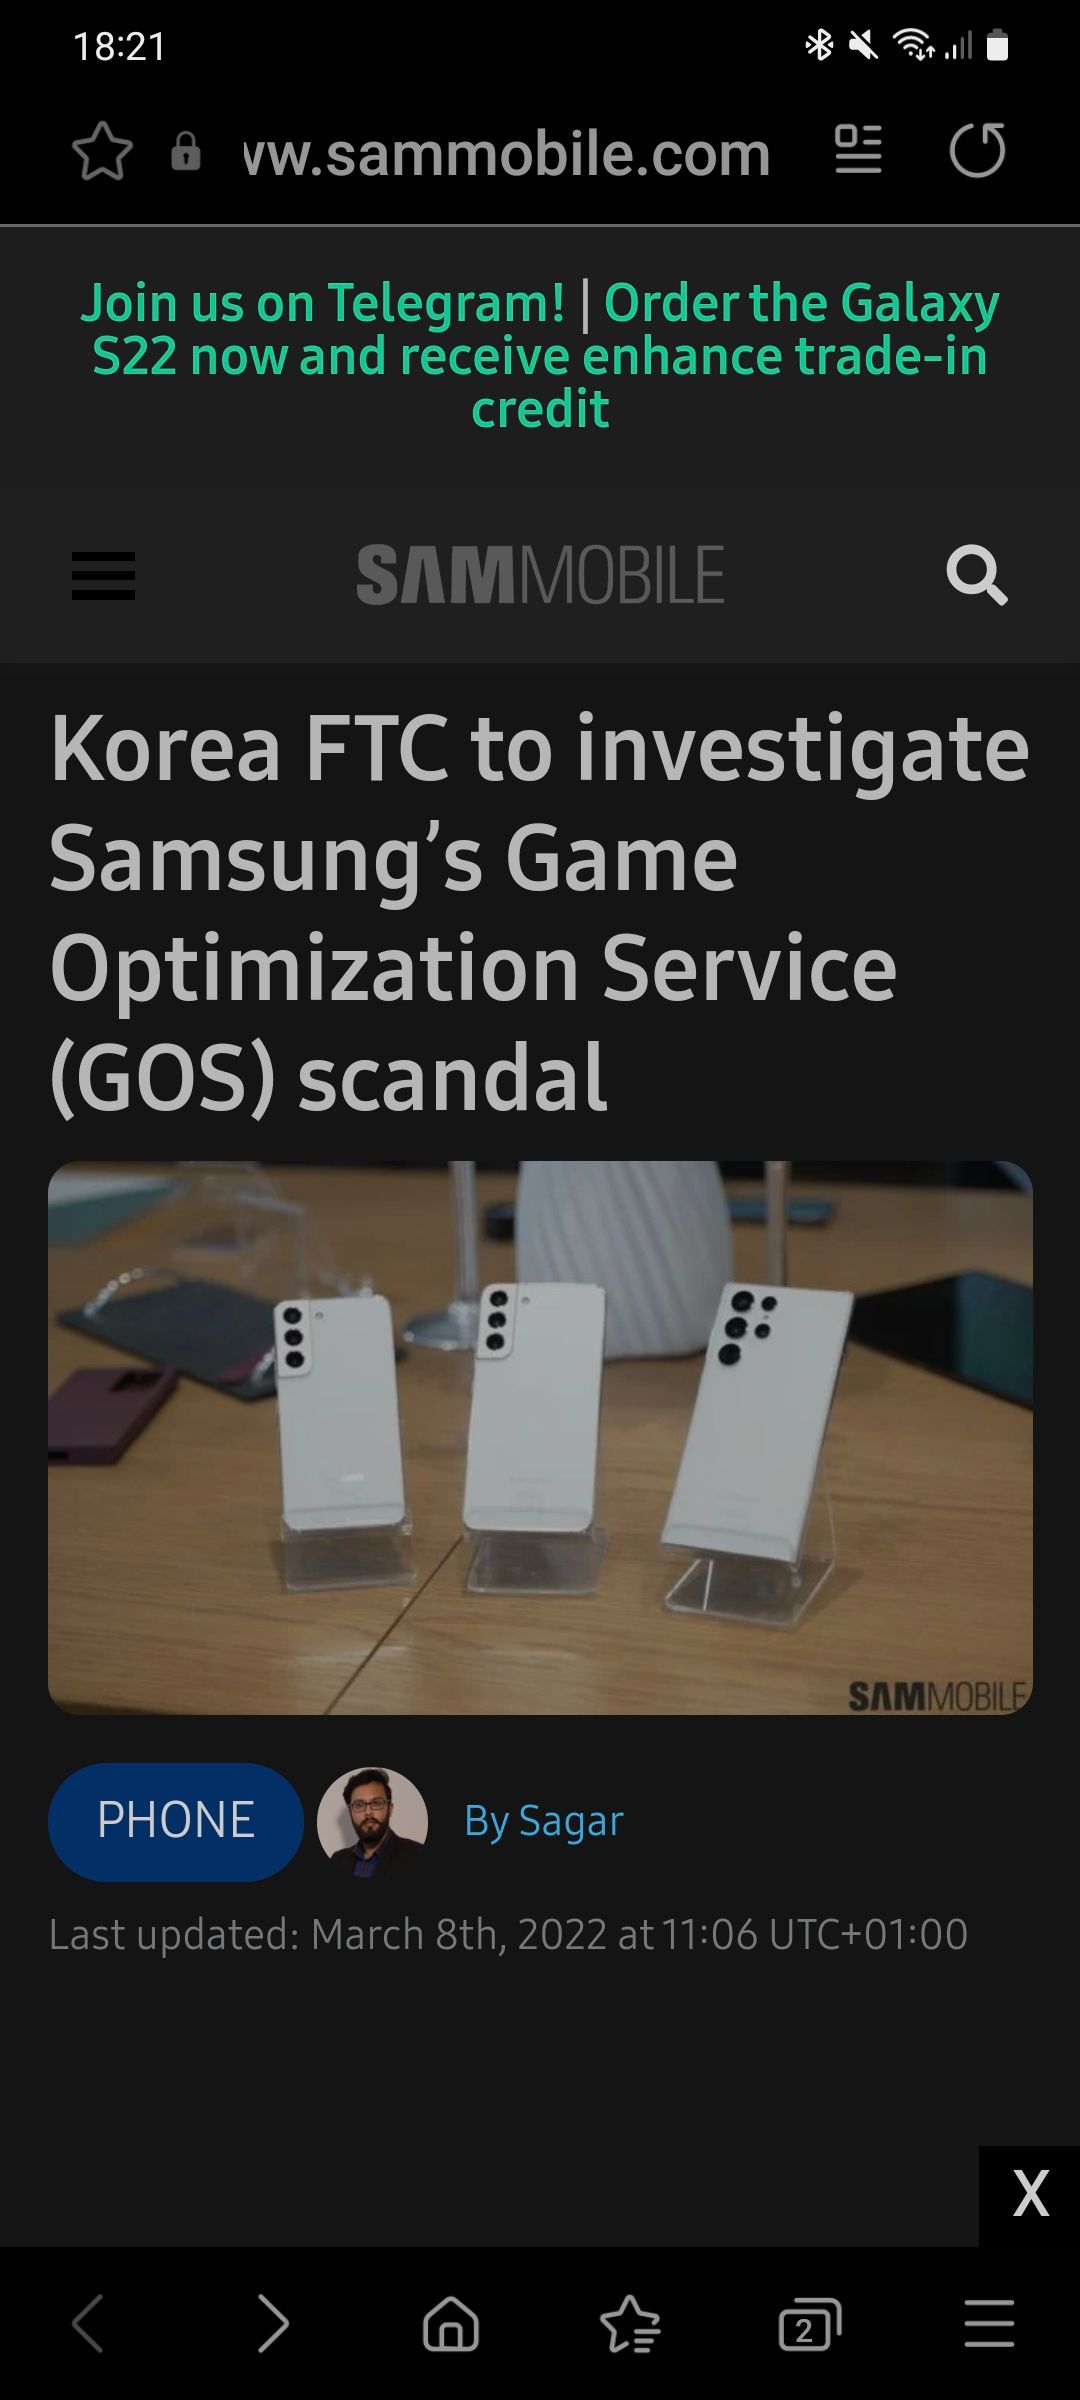 The Samsung Galaxy S22 Ultra is a lie